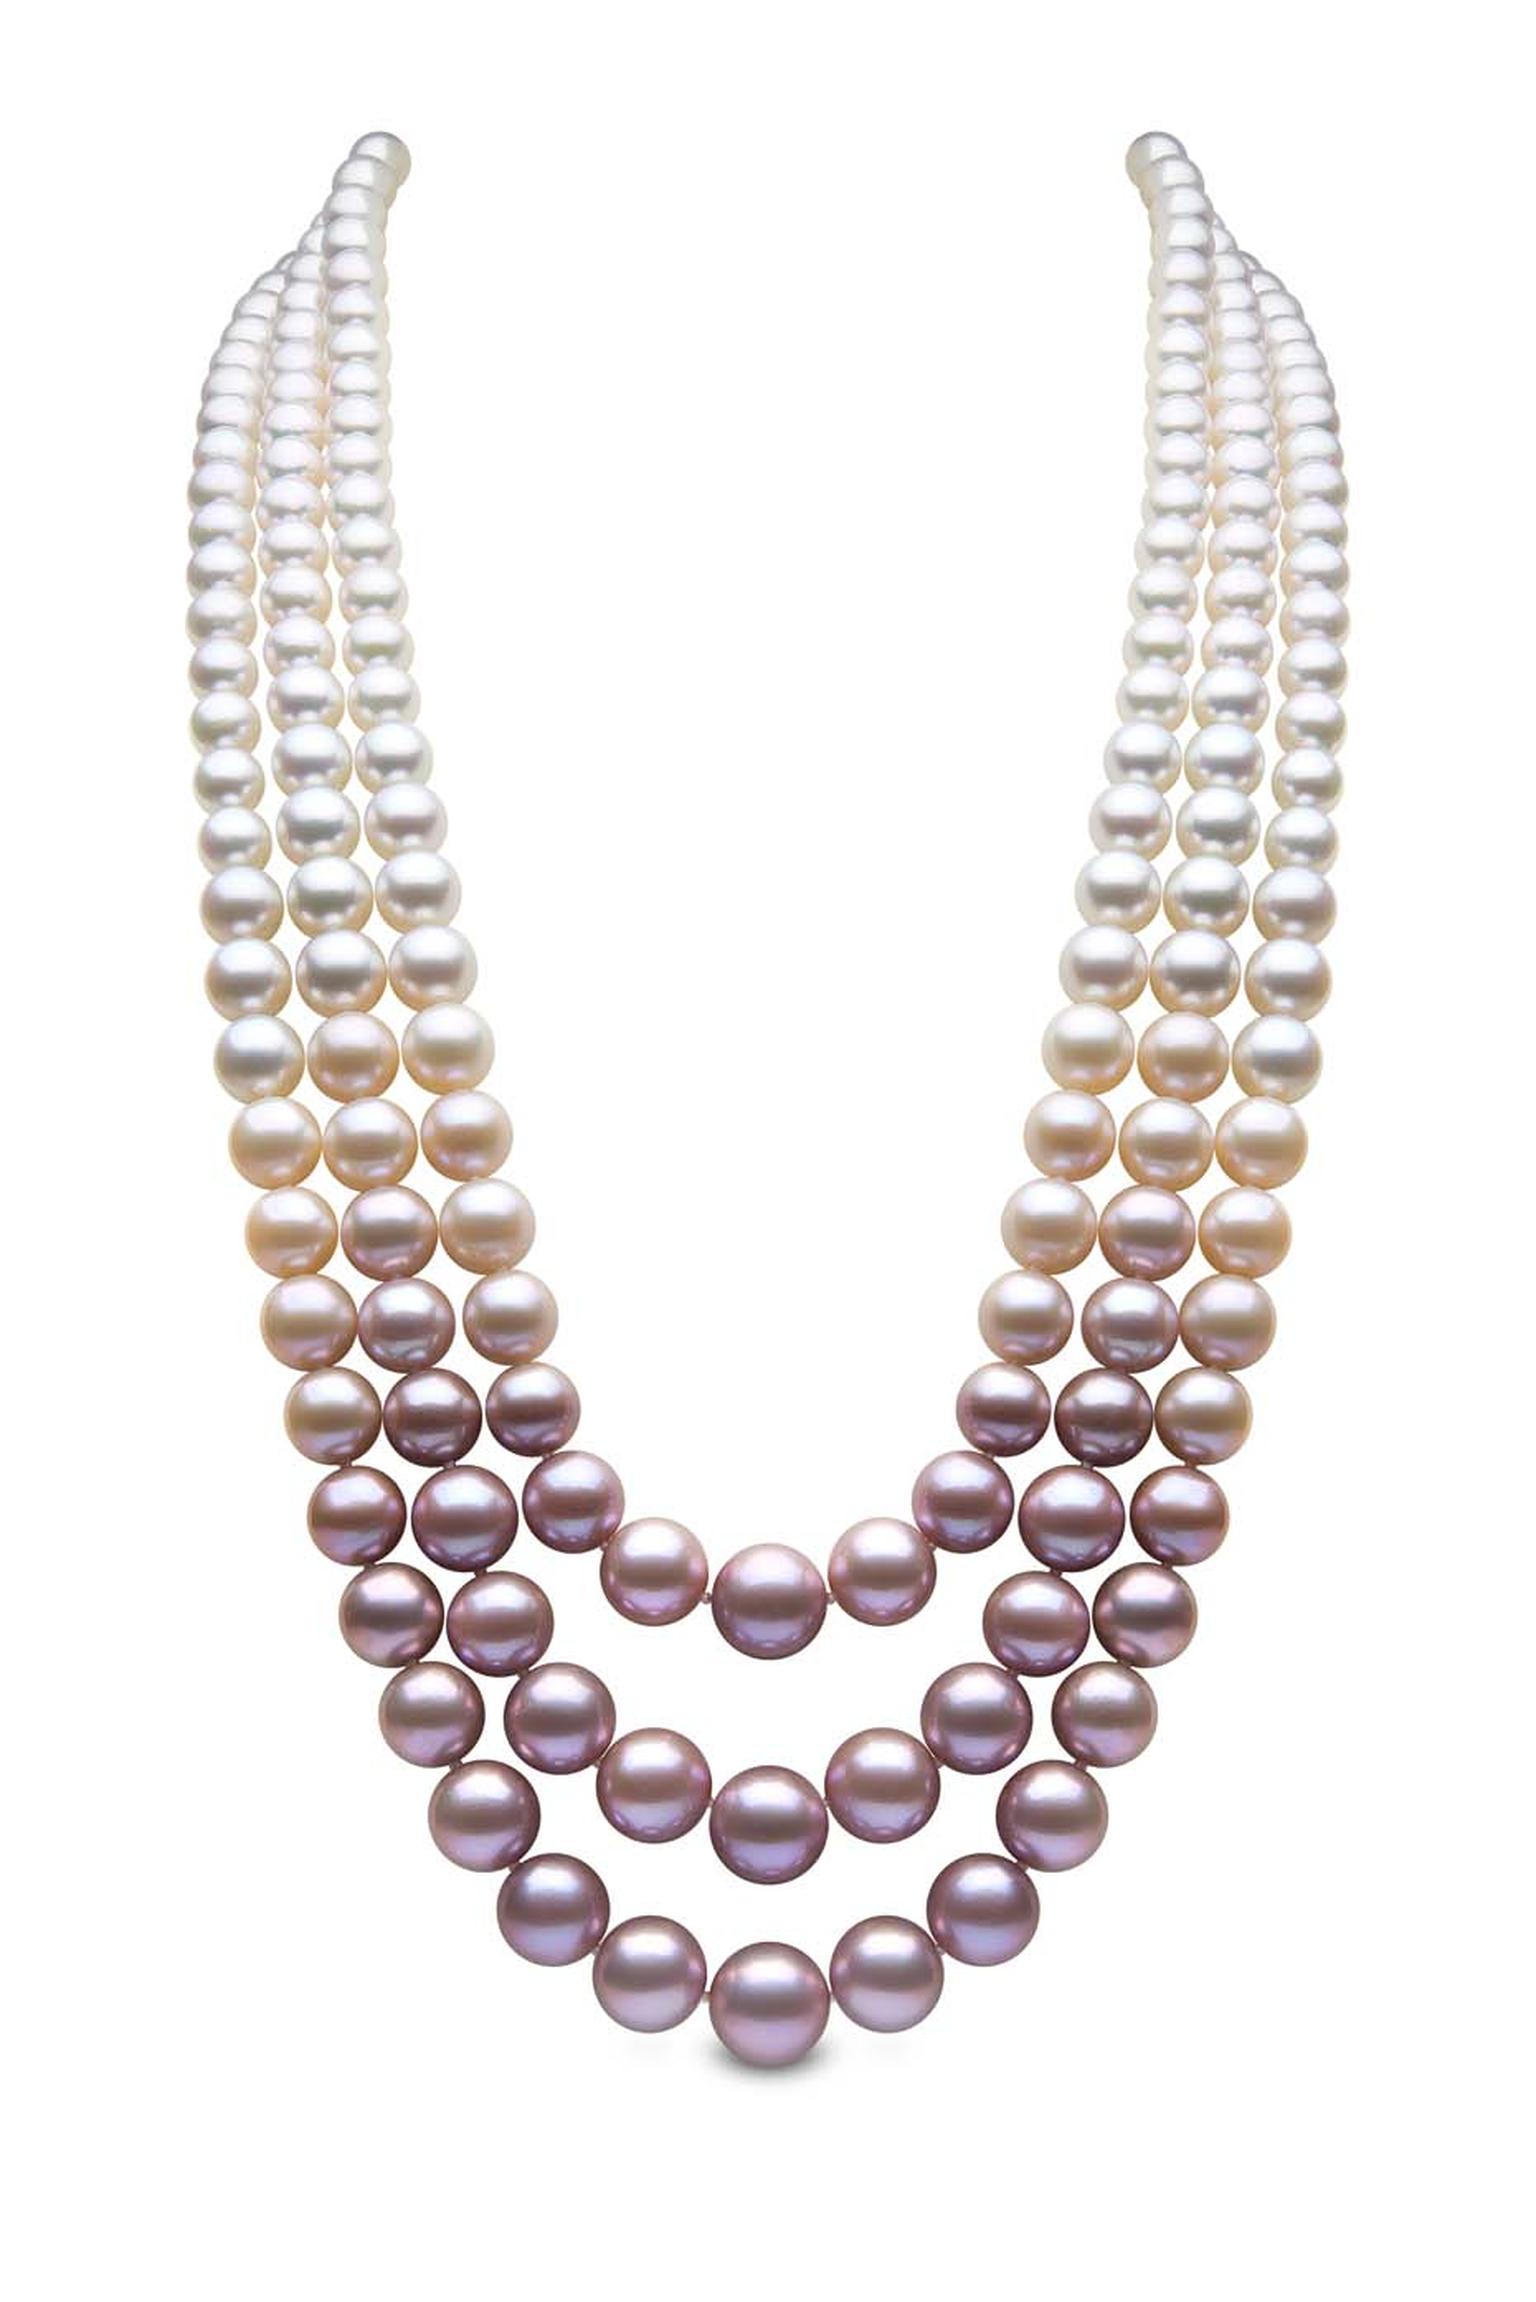 original pearl jewellery designs with price